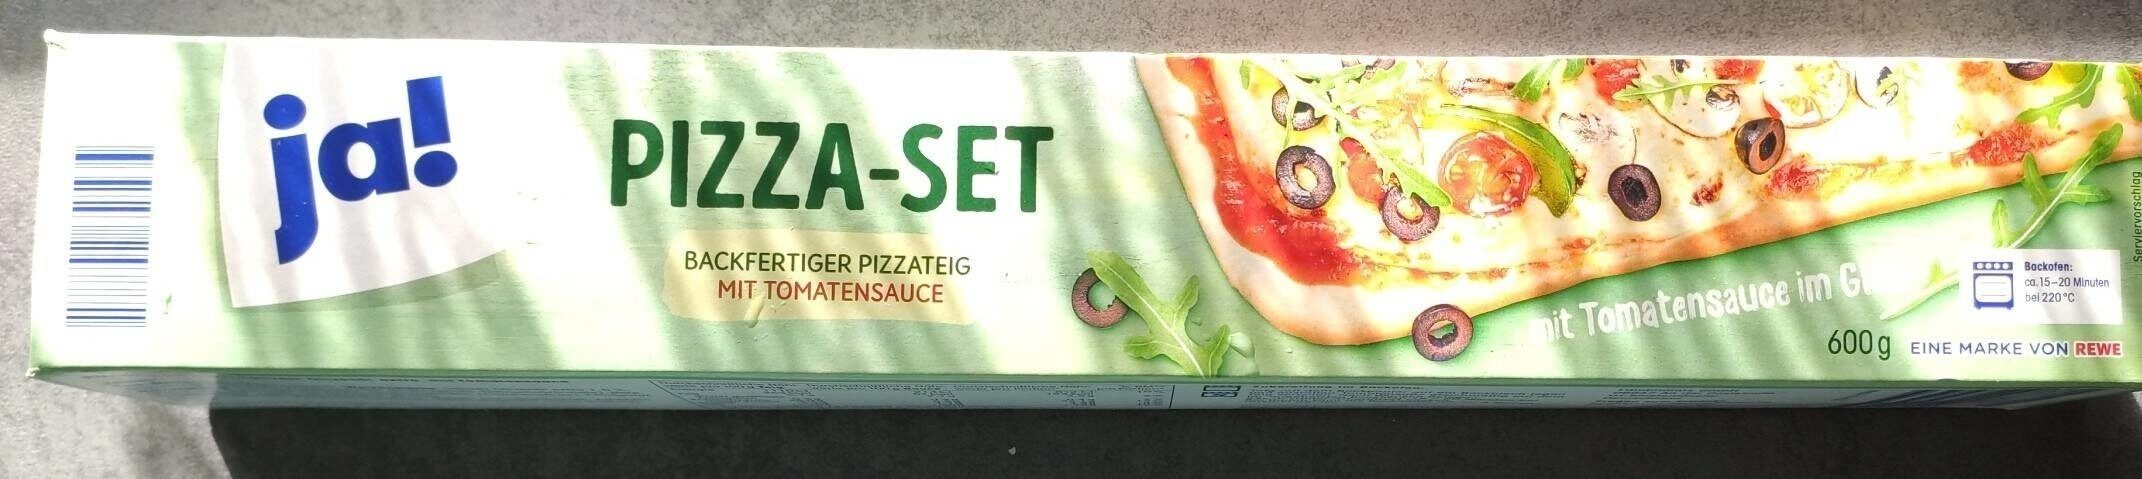 Pizza Set Backfertiger Pizzateig mit Tomatensauce - Produkt